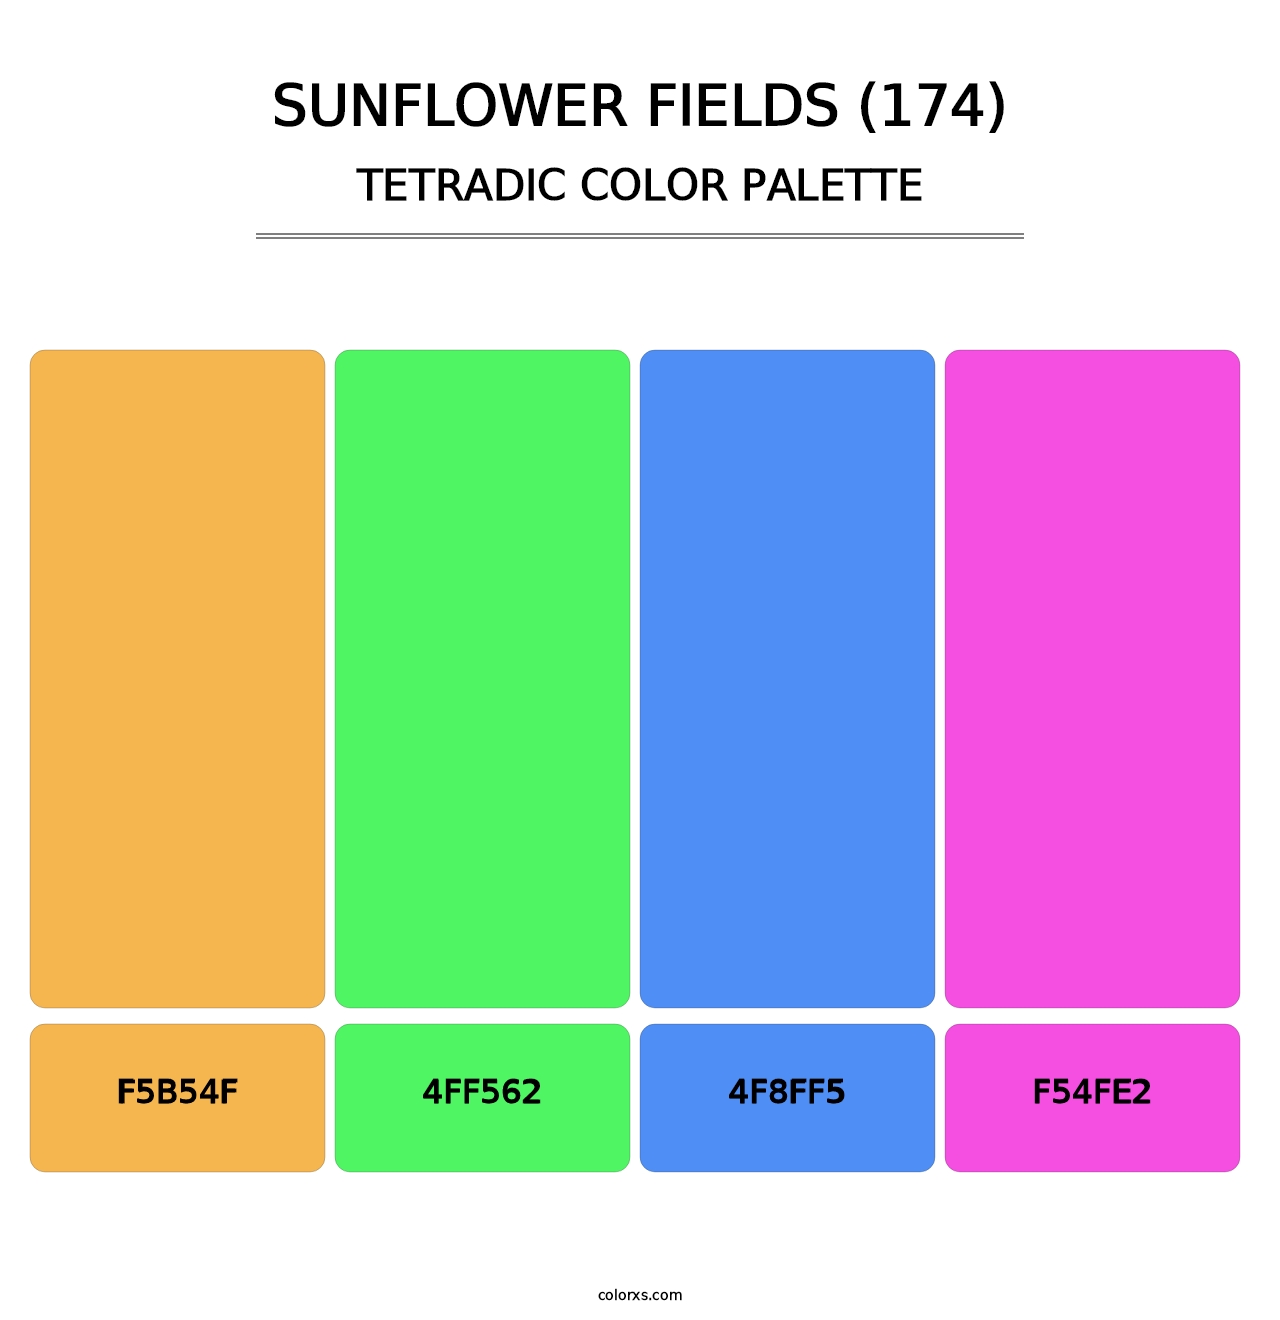 Sunflower Fields (174) - Tetradic Color Palette